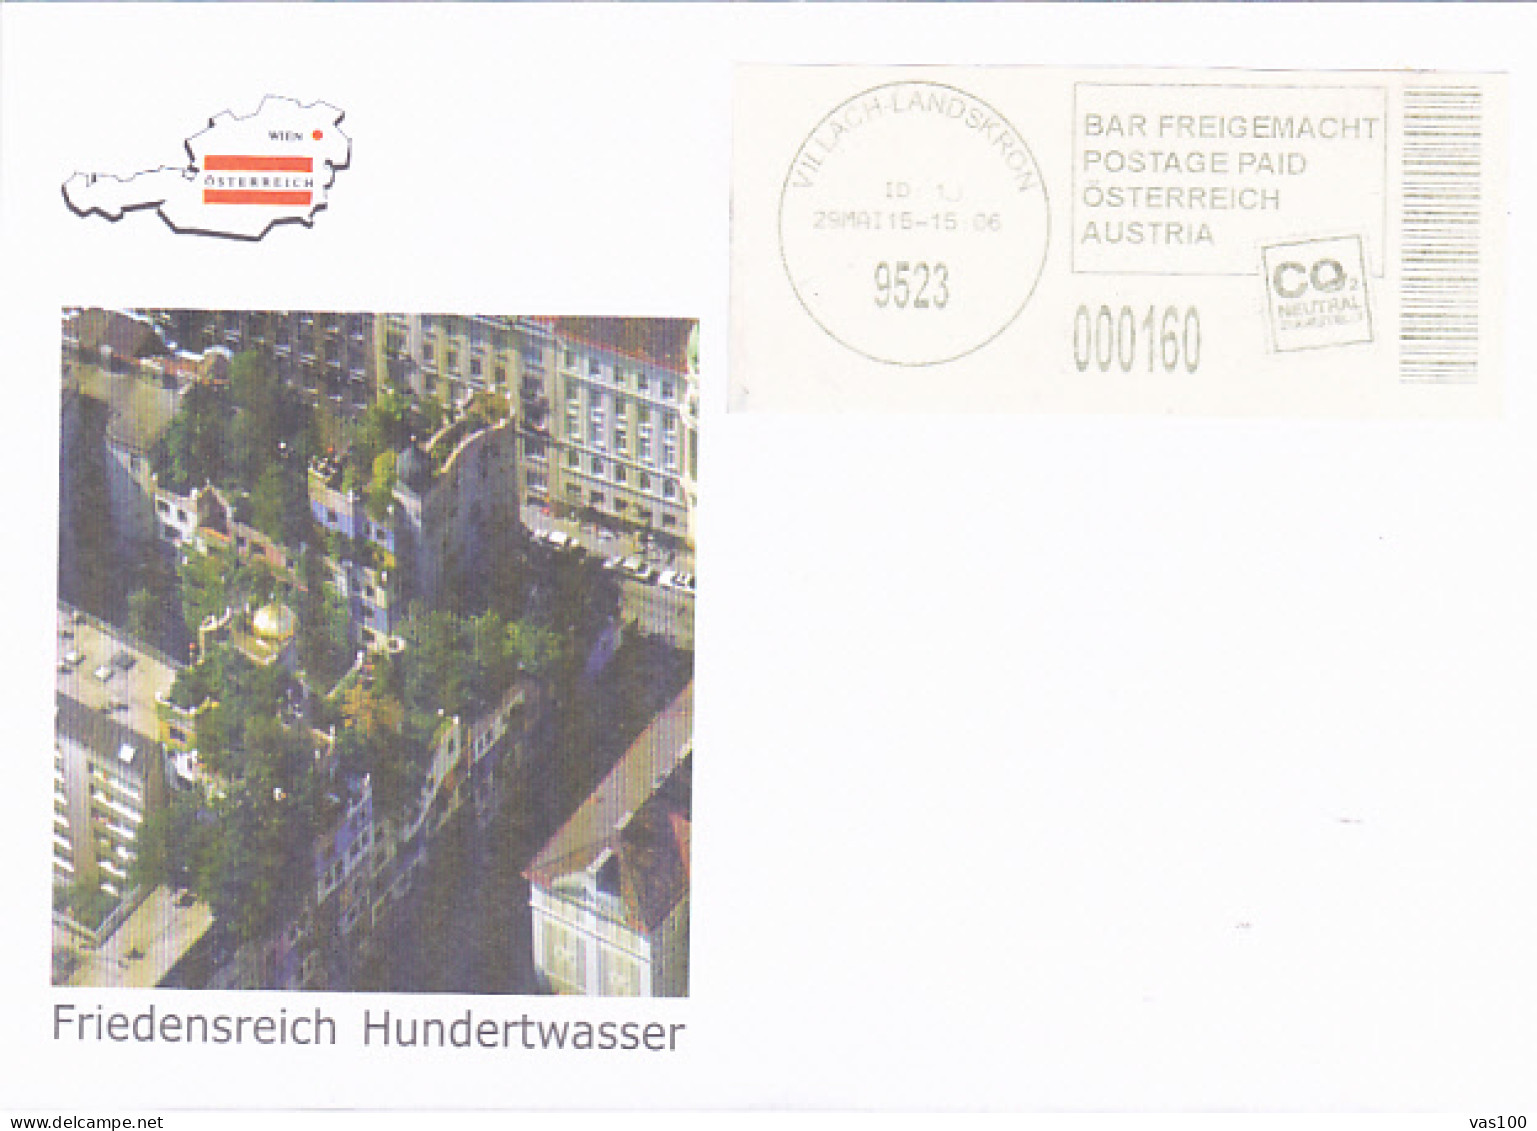 FRIEDENSREICH HUNDERTWASSER, ARCHITECT, POSTAGE PAID SPECIAL COVER, 2015, AUSTRIA - Lettres & Documents